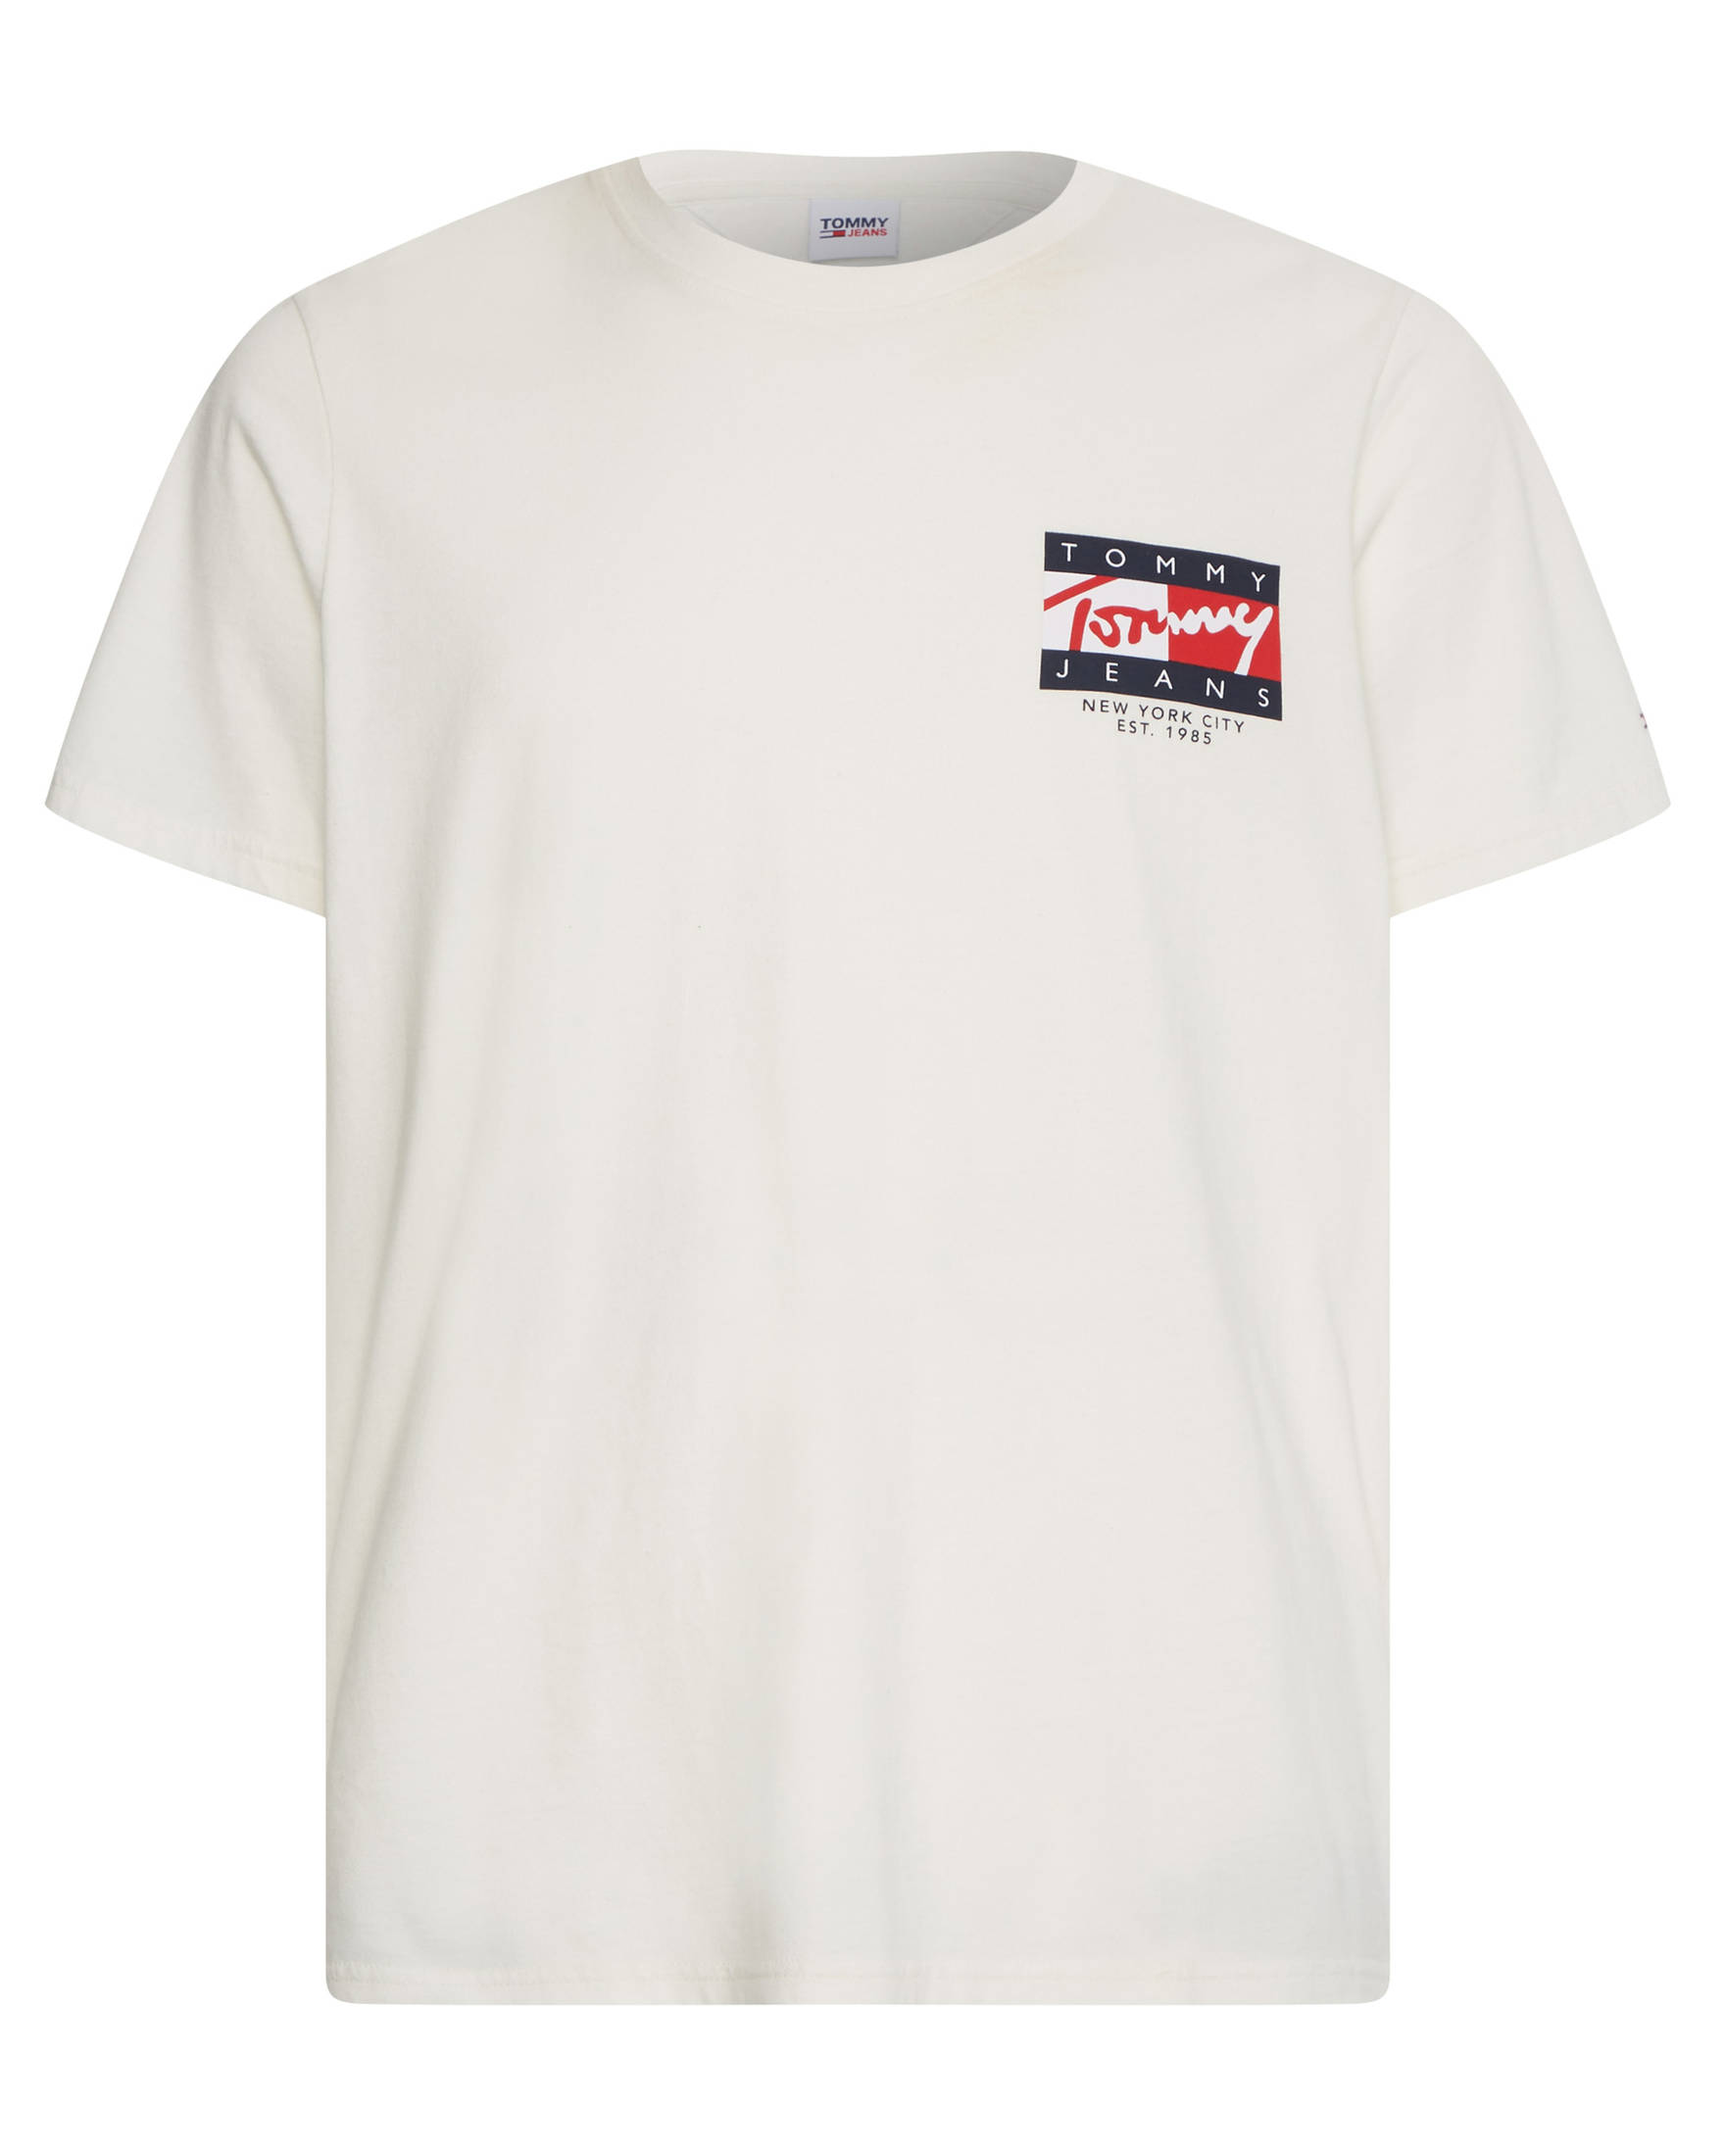 Tommy Jeans Herren SIGNATURE T-Shirt | VINTAGE FLAG engelhorn kaufen TEE